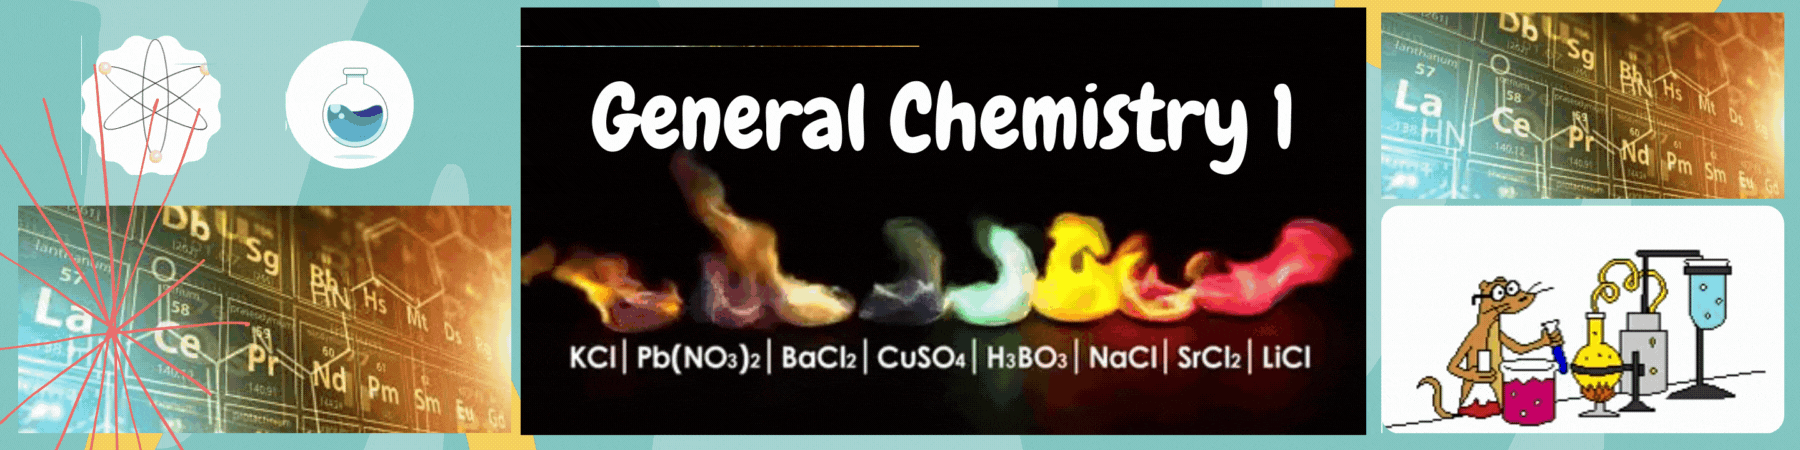 General Chemistry 1 - Quarter 3 (For Enhancement)